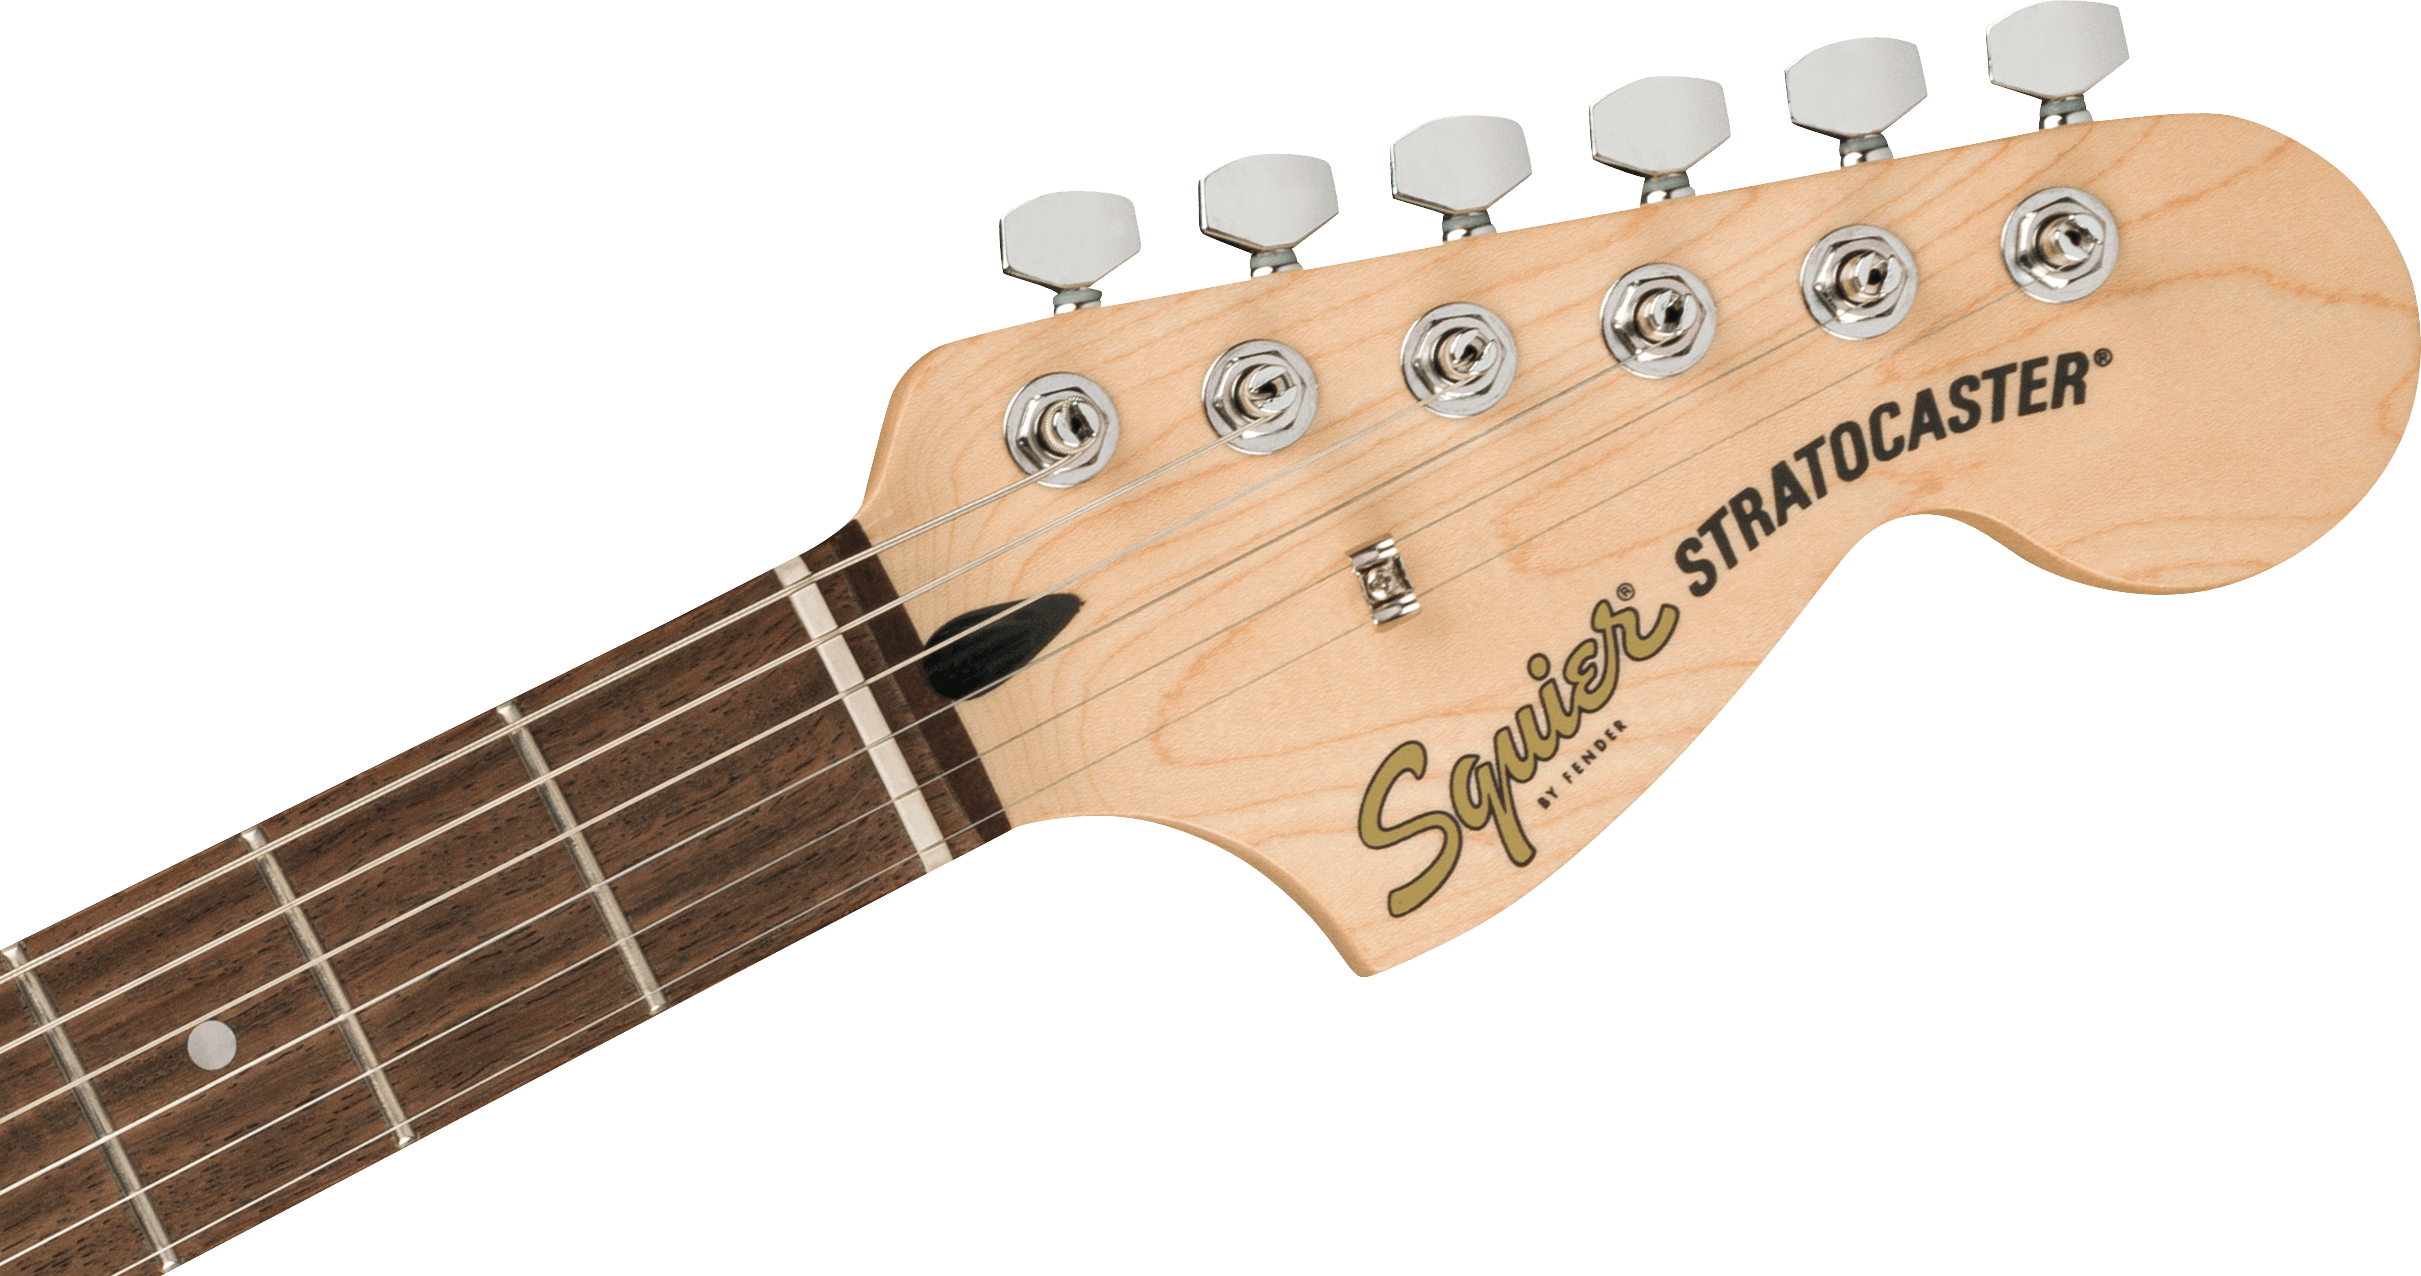 Affinity Series Stratocaster HH, Laurel Fingerboard, Black Pickguard, Charcoal Frost Metallic追加画像